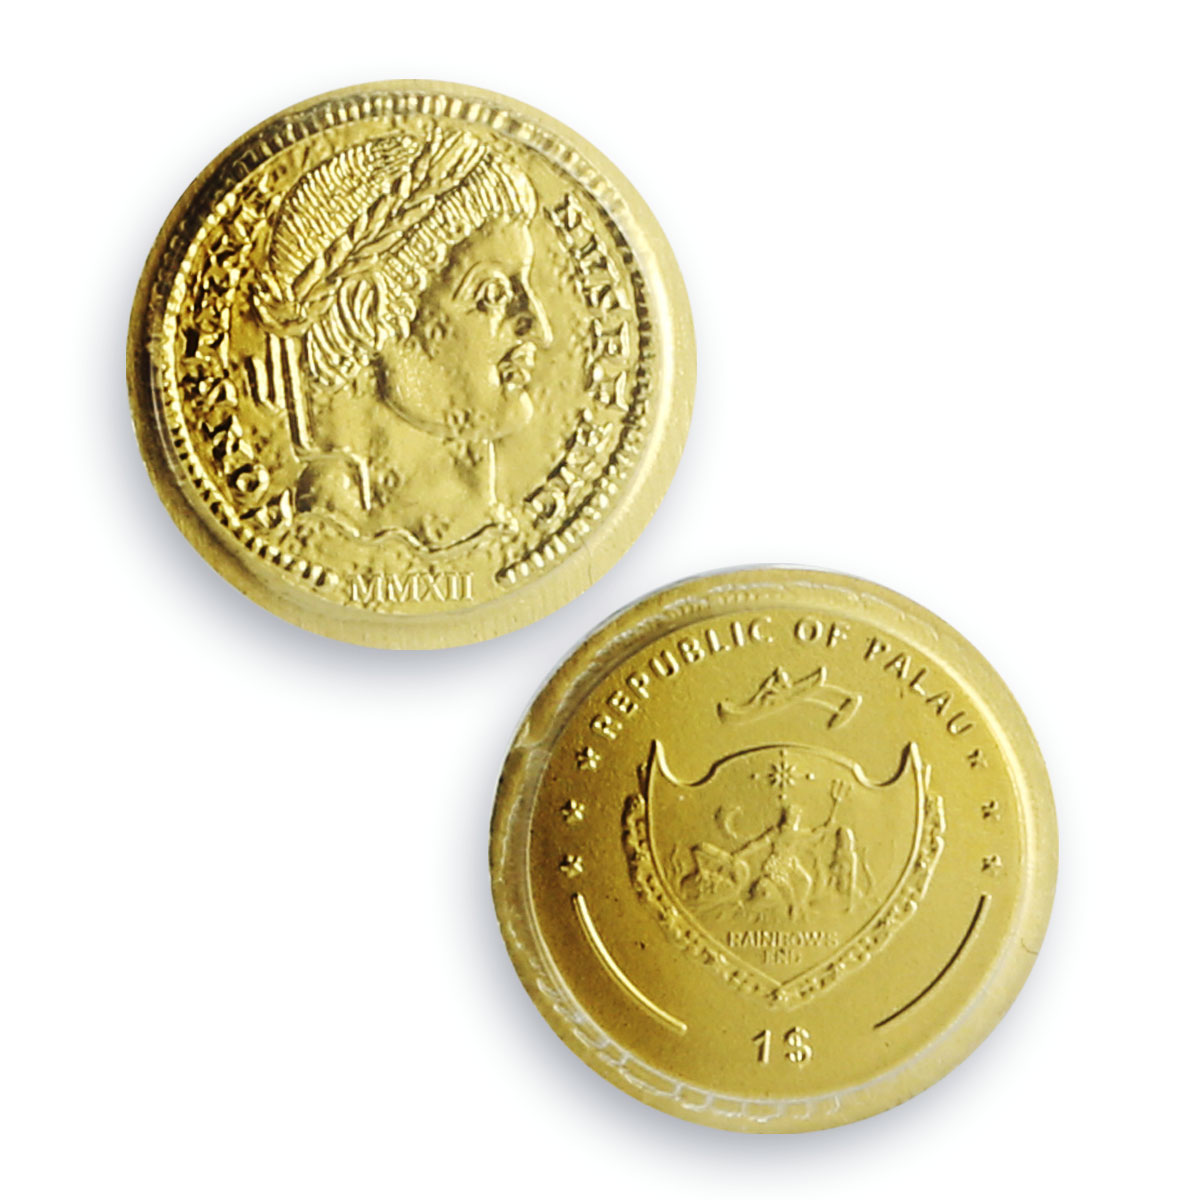 Palau 1 dollar Rome Empire Emperor Constantine Politics MS70 PCGS gold coin 2012